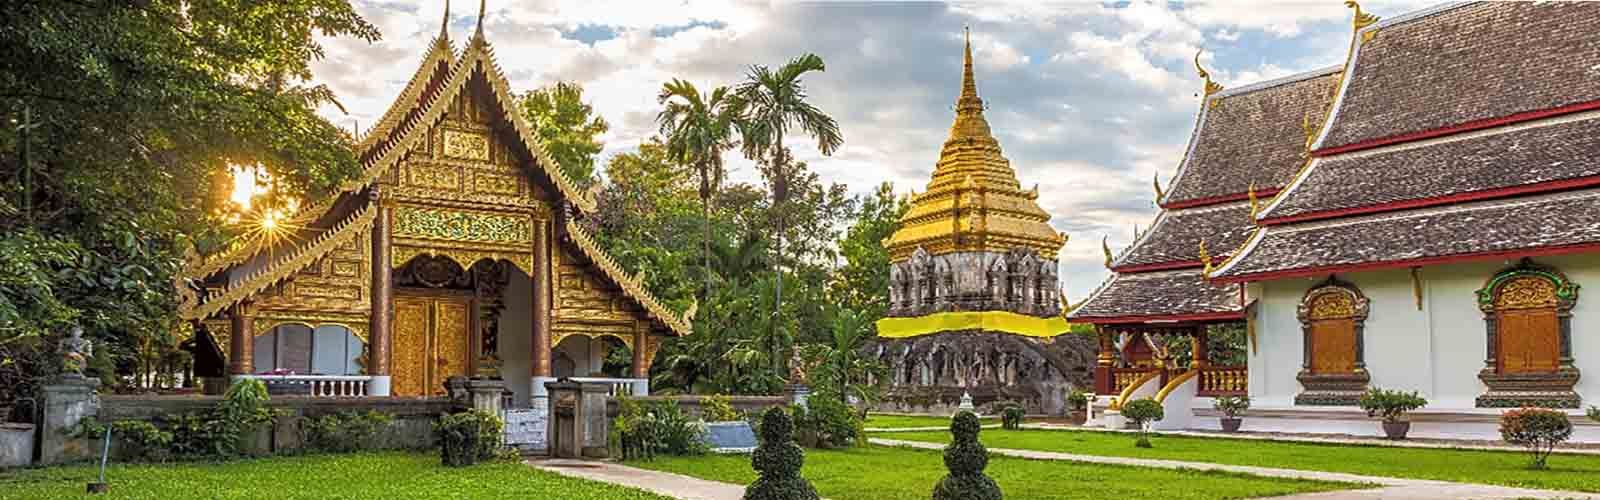 Chiang Mai Travel Guide | Asianventure Tours